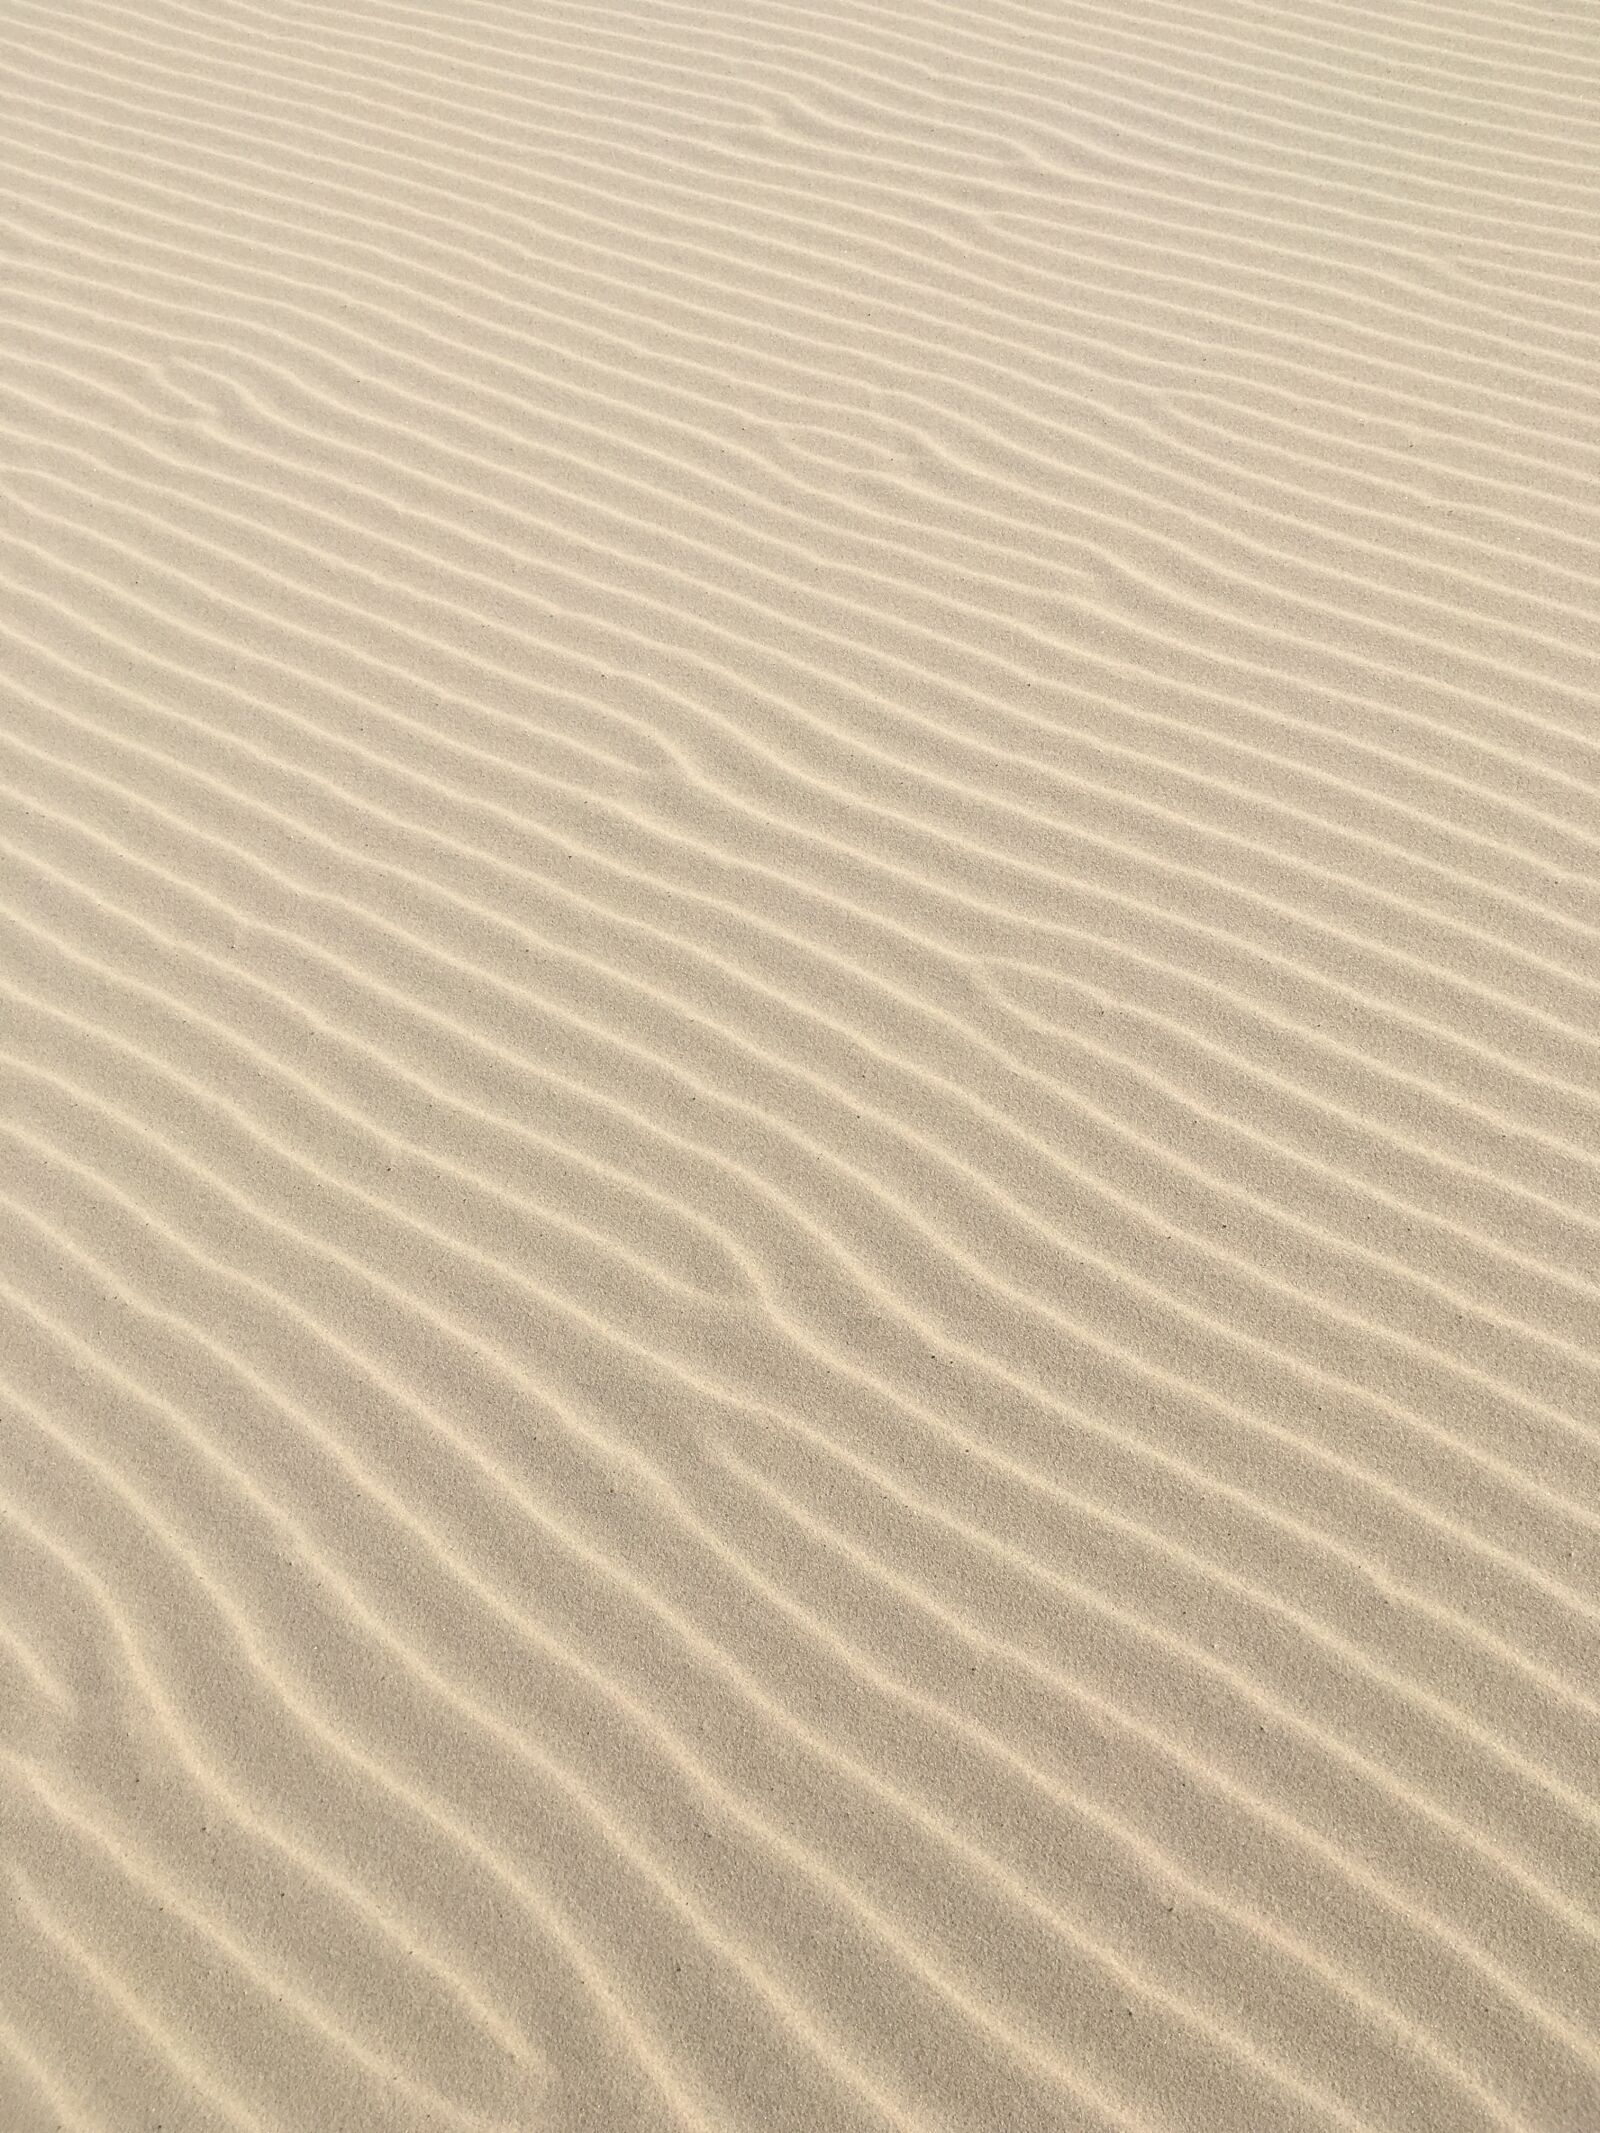 Apple iPhone SE sample photo. Sand, sand lines, beach photography